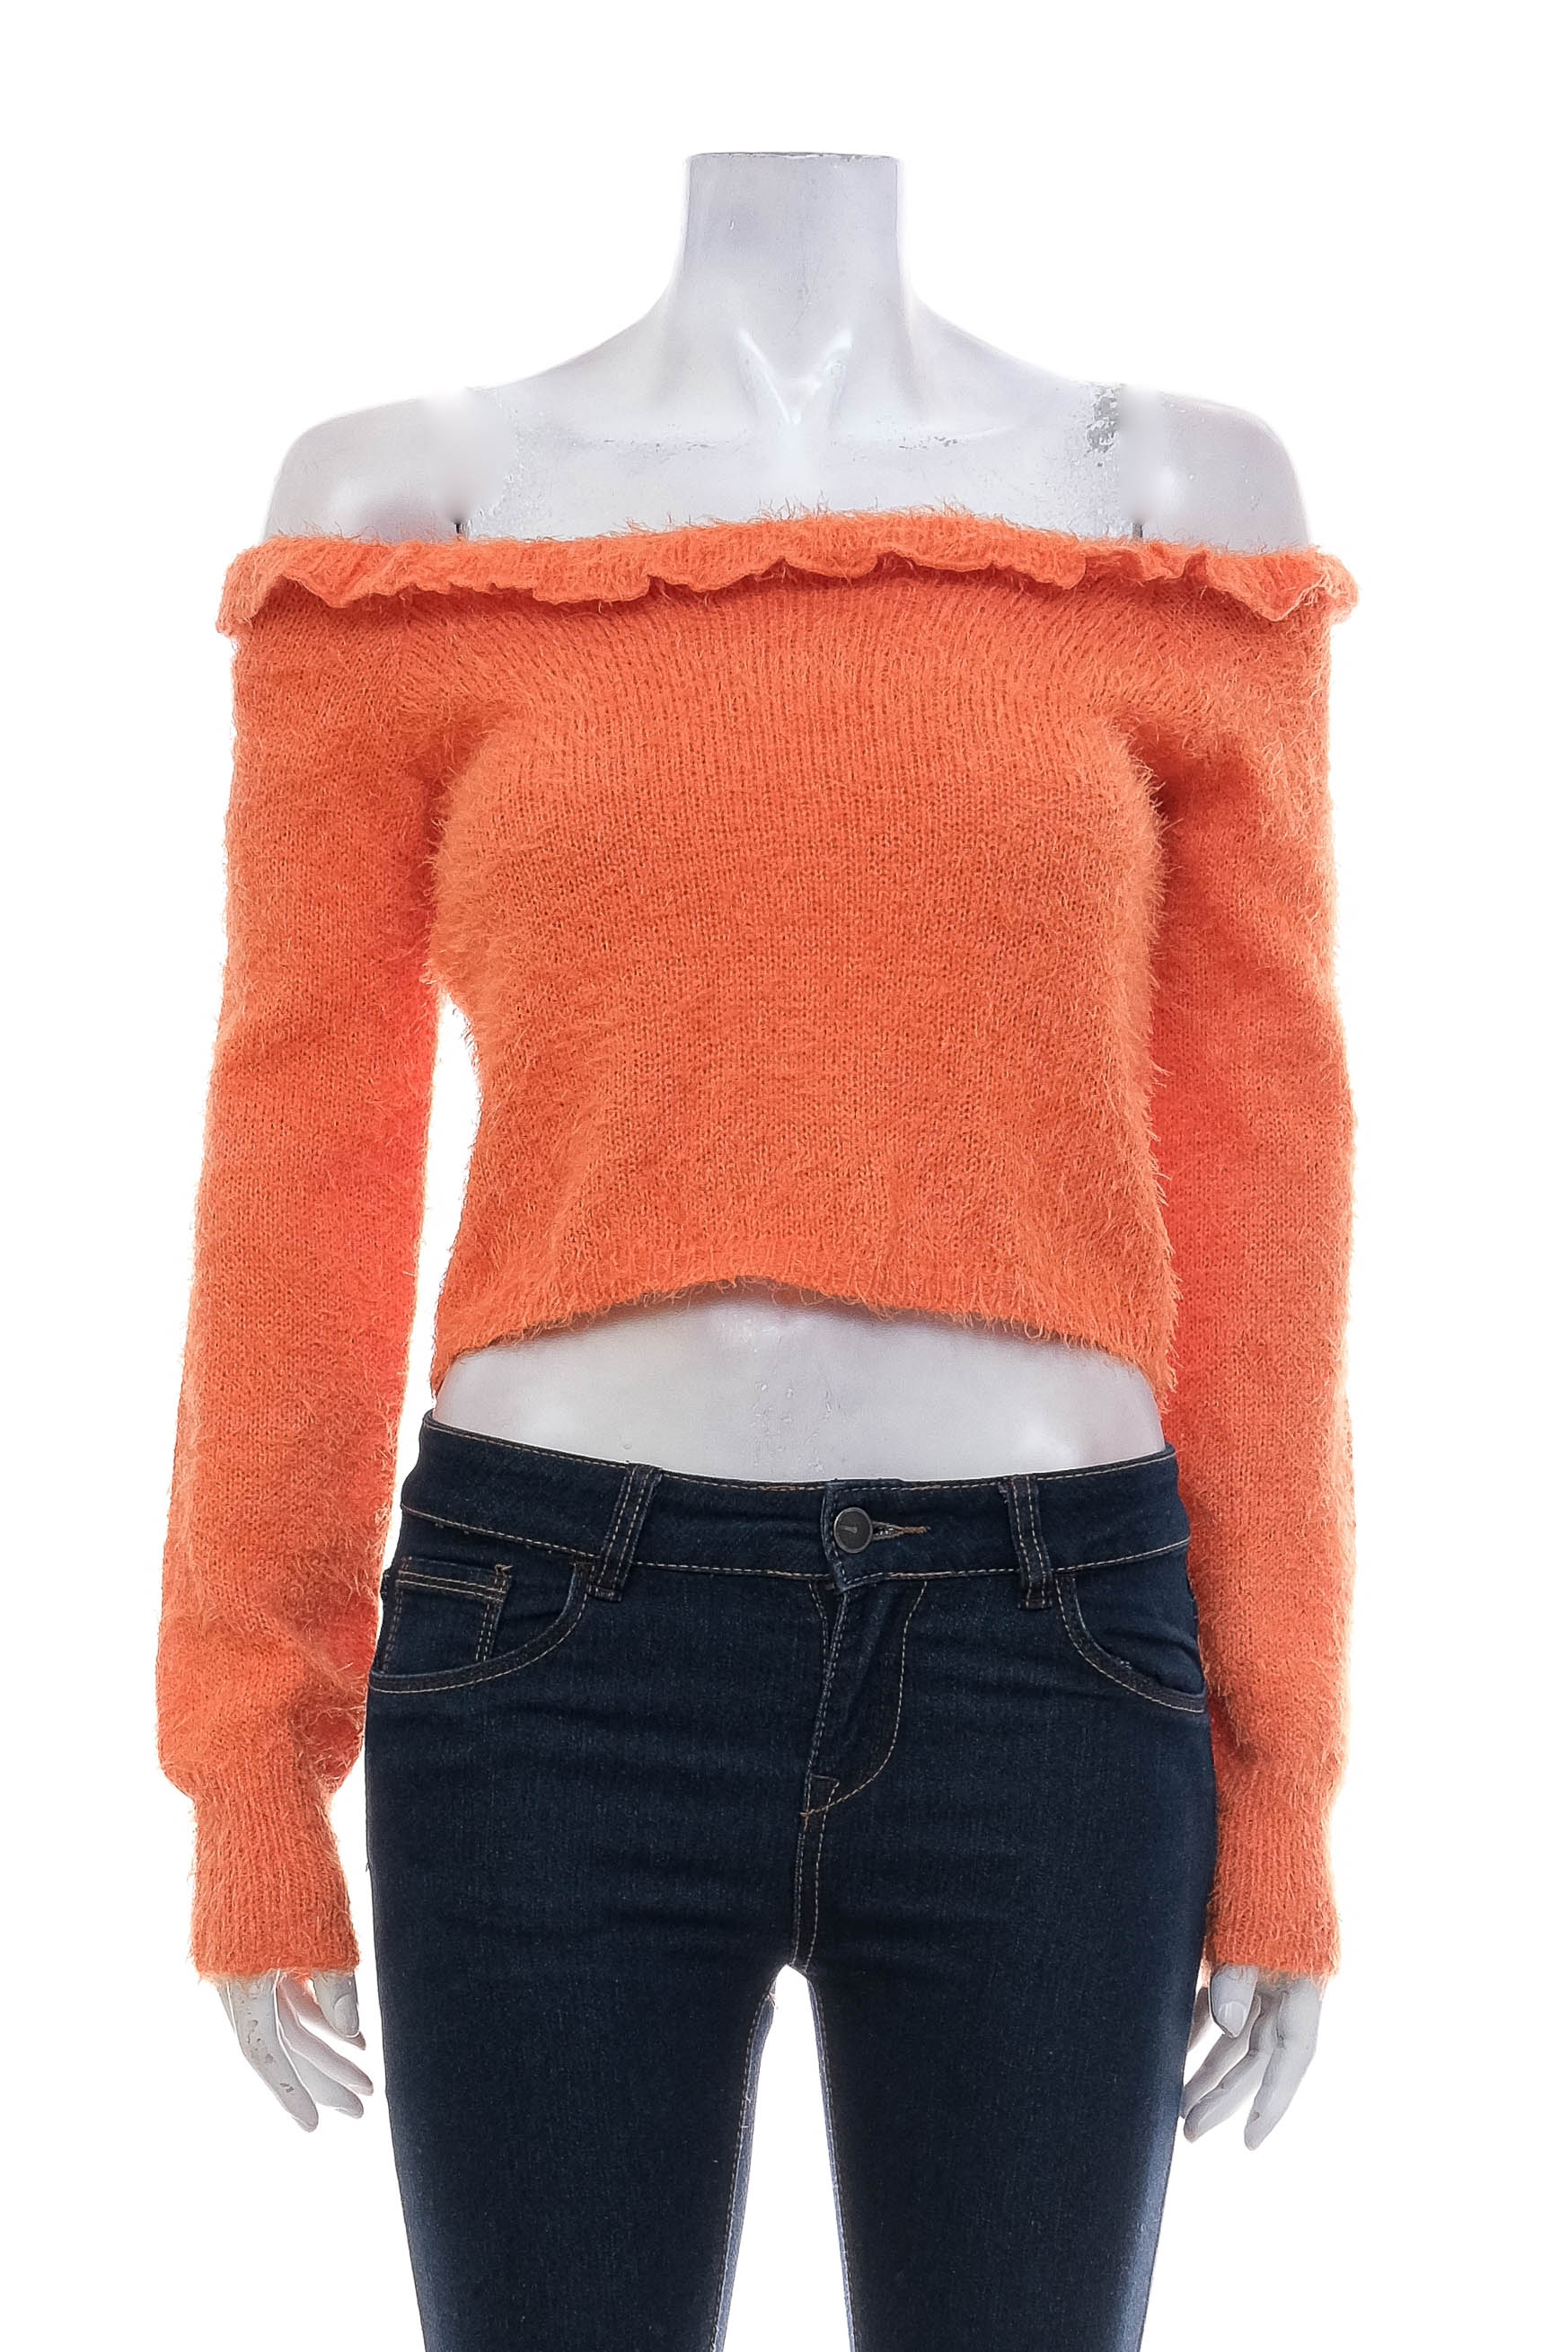 Women's sweater - New Look - 0